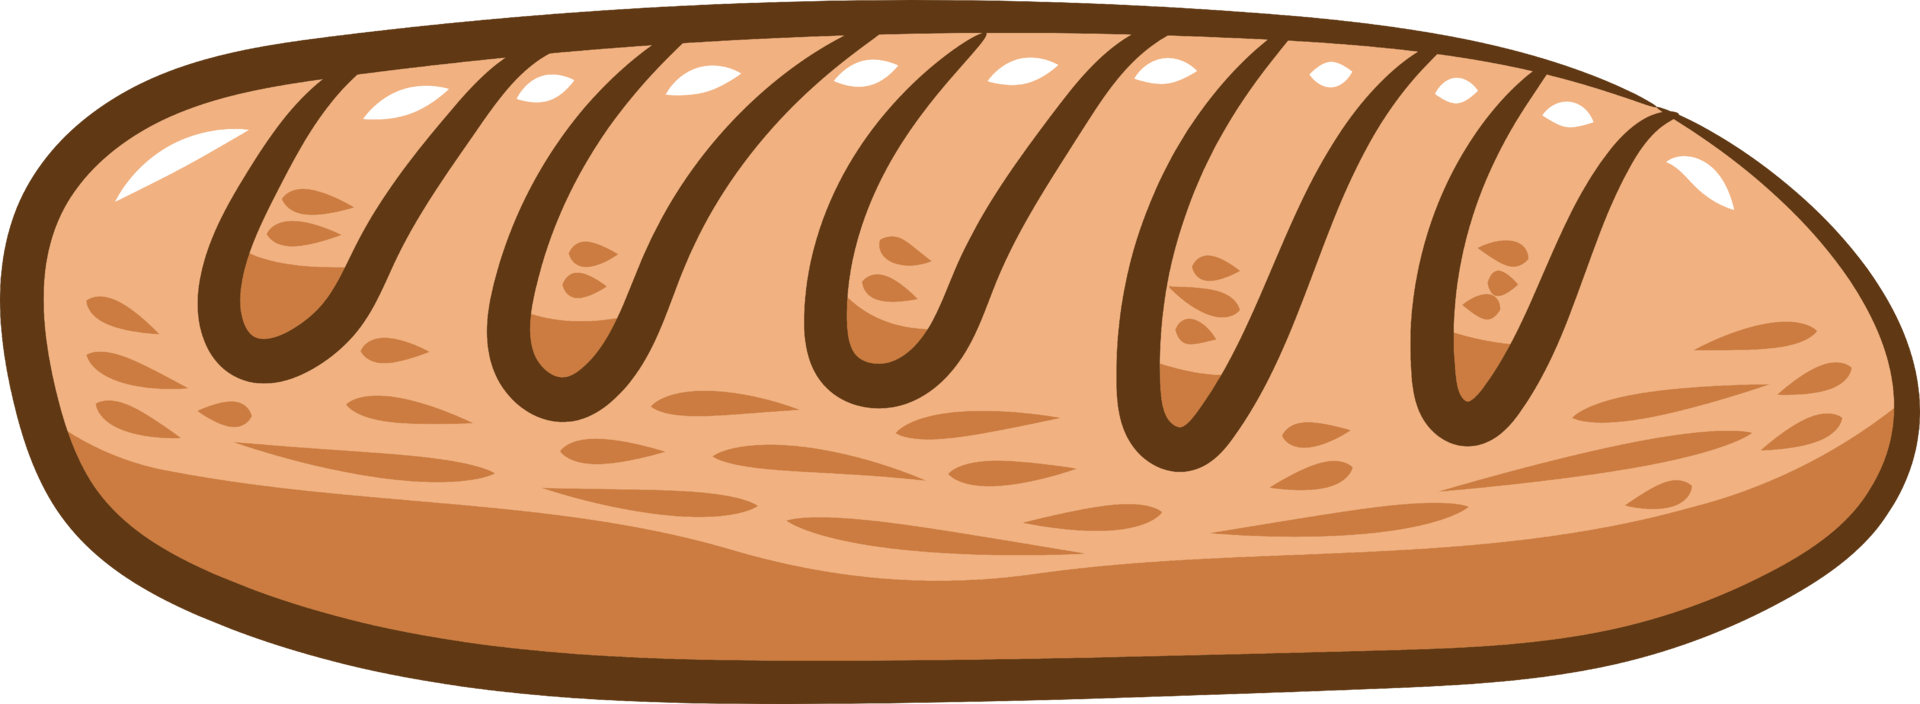 Bread png graphic clipart design